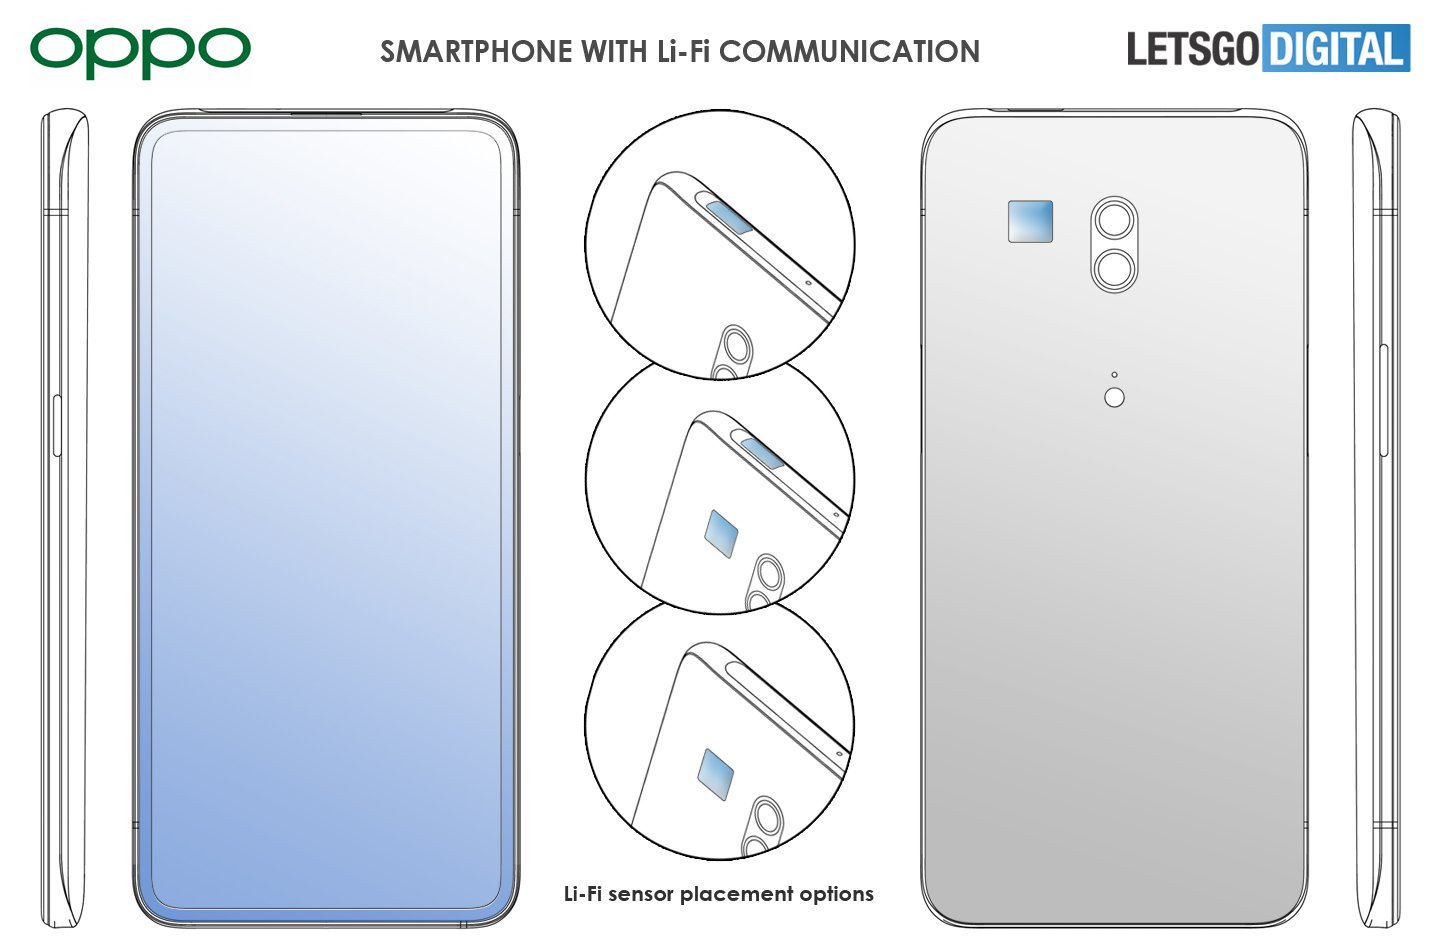 OPPO Smartphone with Li-Fi Technology Patent